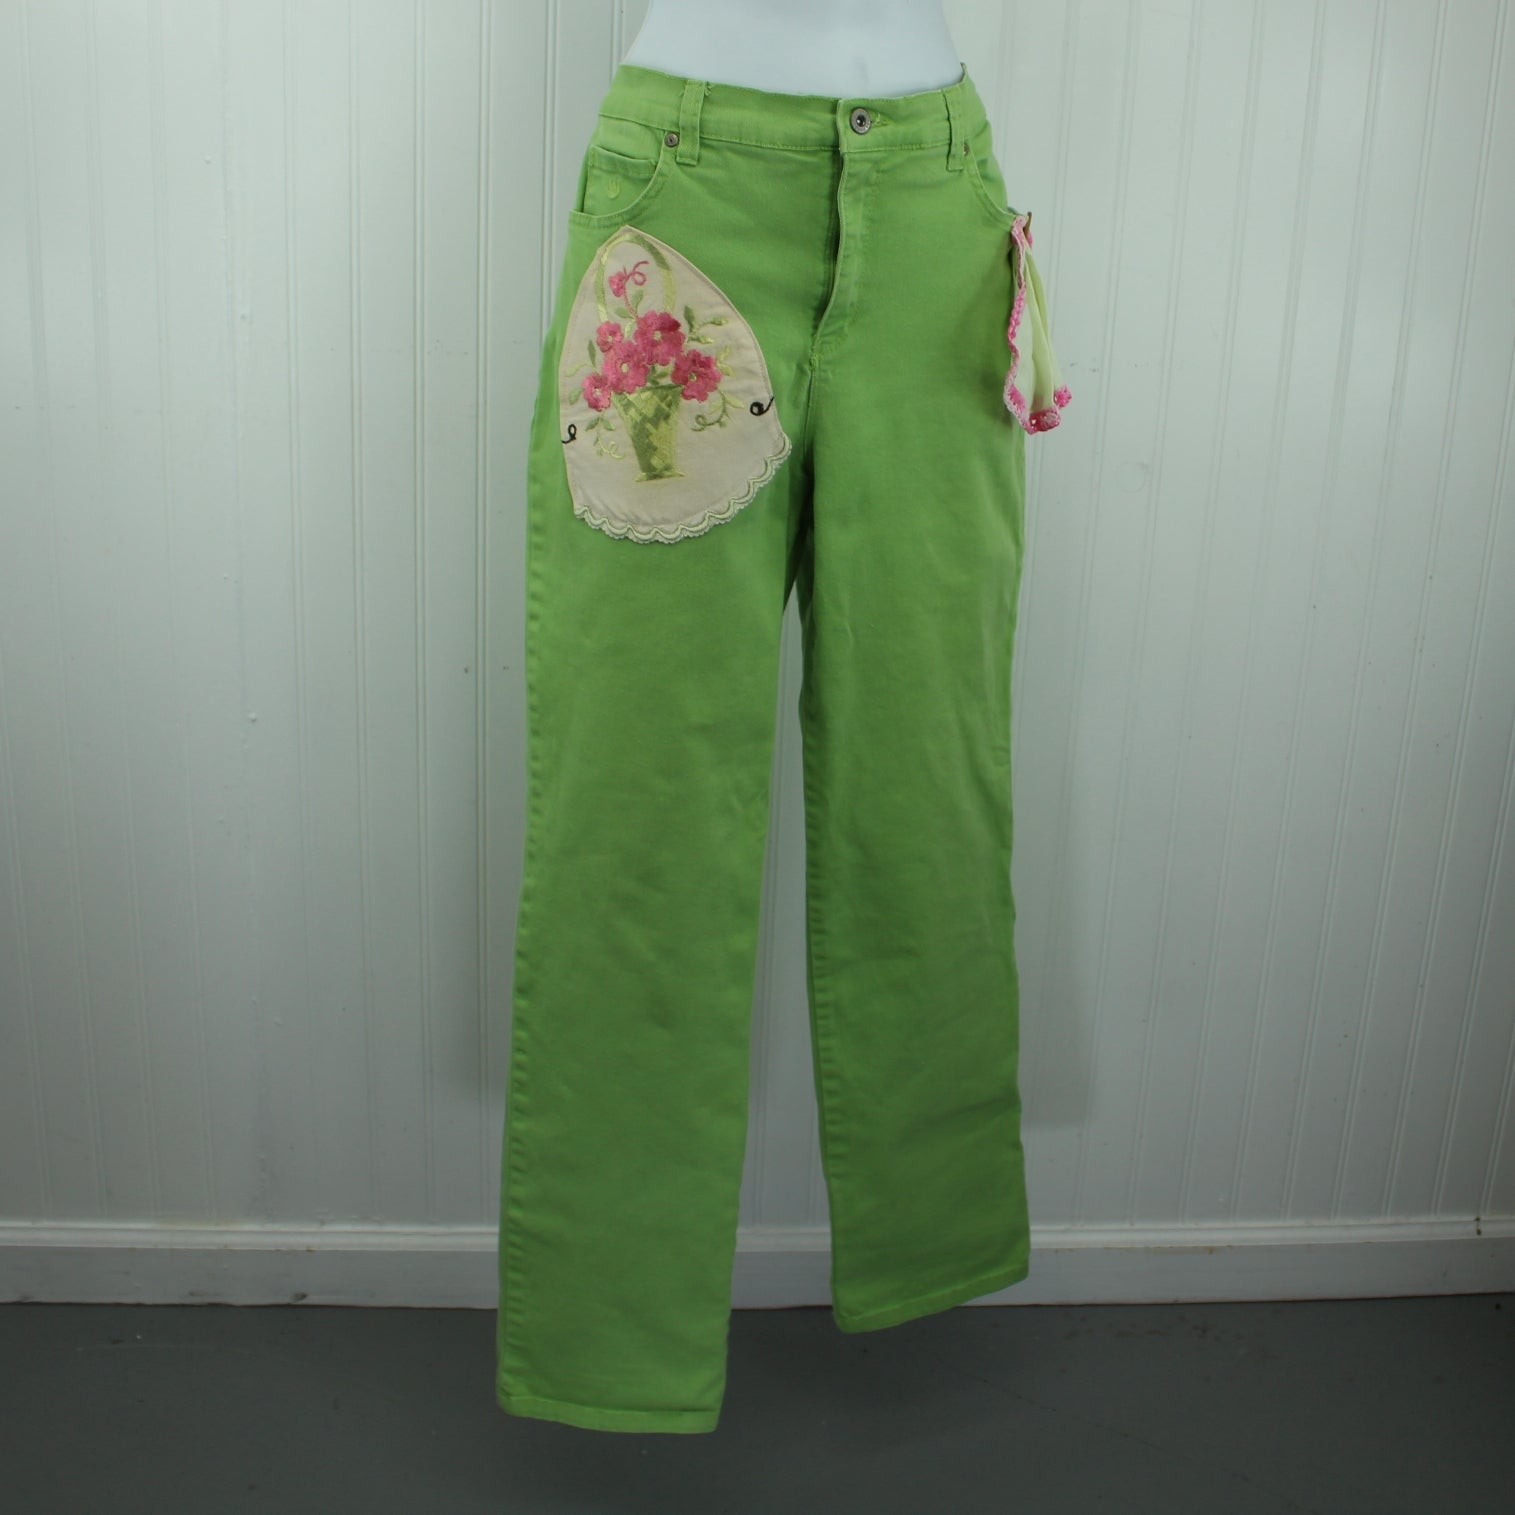 Gloria Vanderbilt Chartreuse Green Jeans Patzi Design Embroidery Flower Size 8 full length acid green jeans